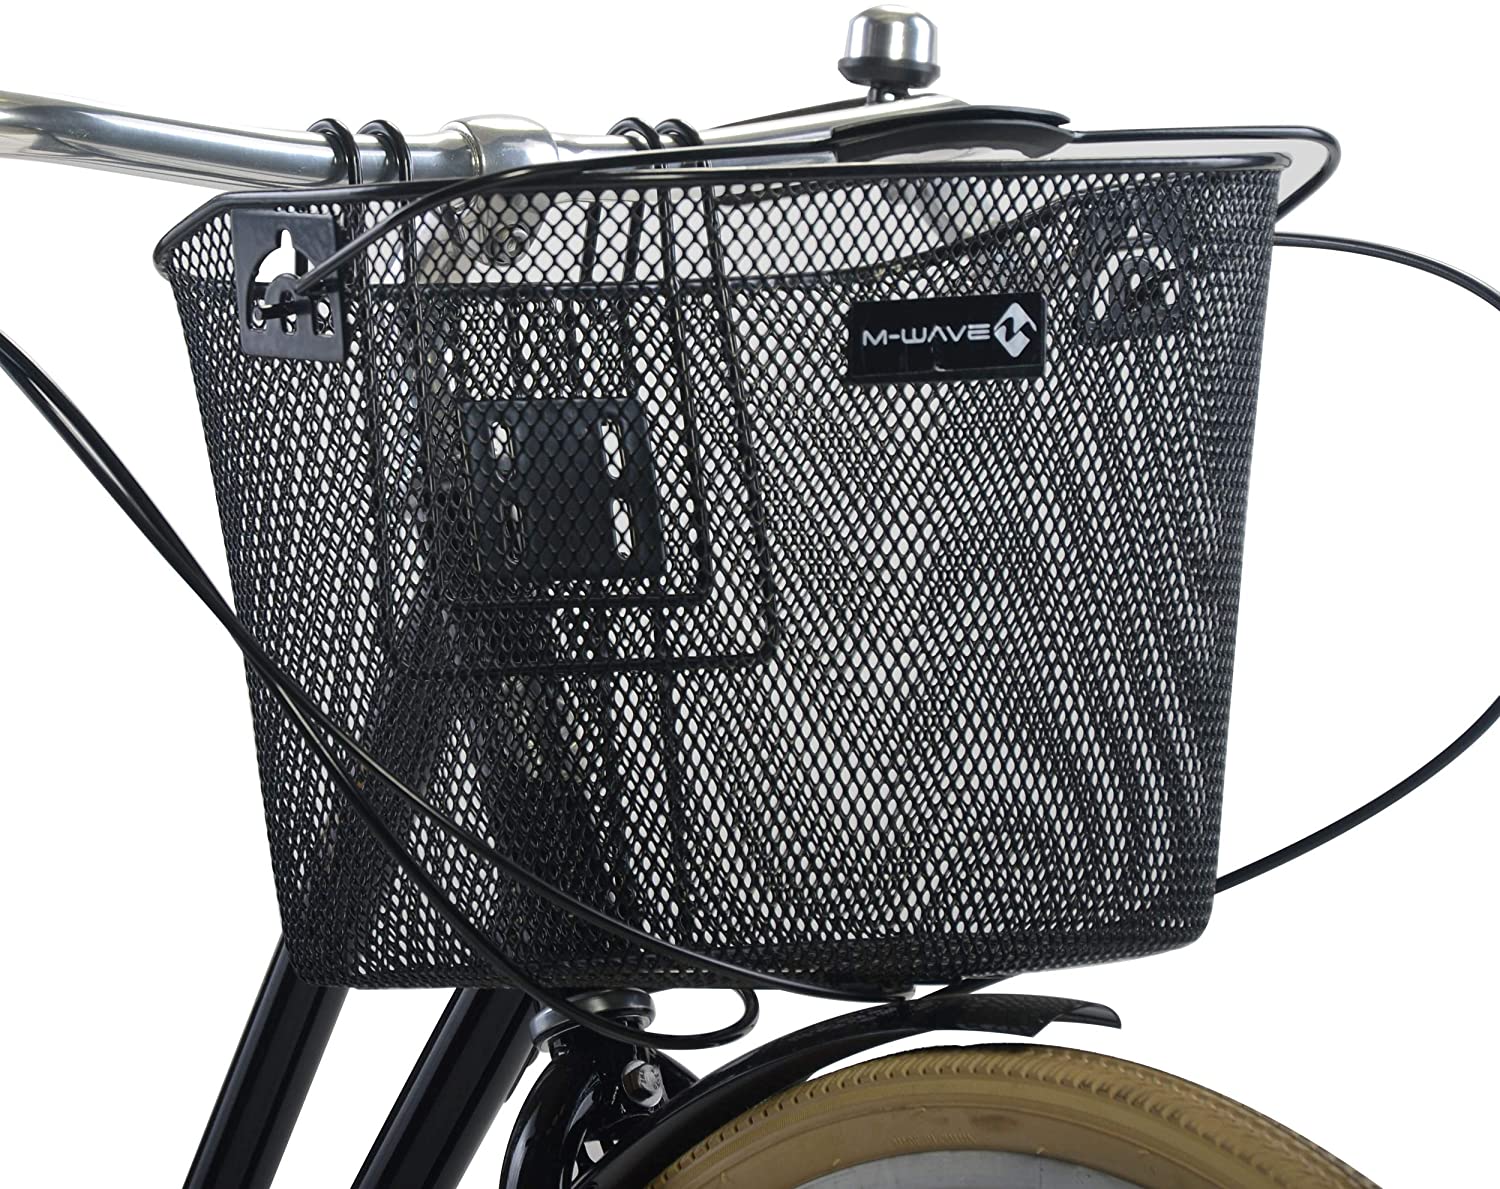 M-Wave Quick Mount Wire Basket, Black, 18.5 Liters - image 4 of 5